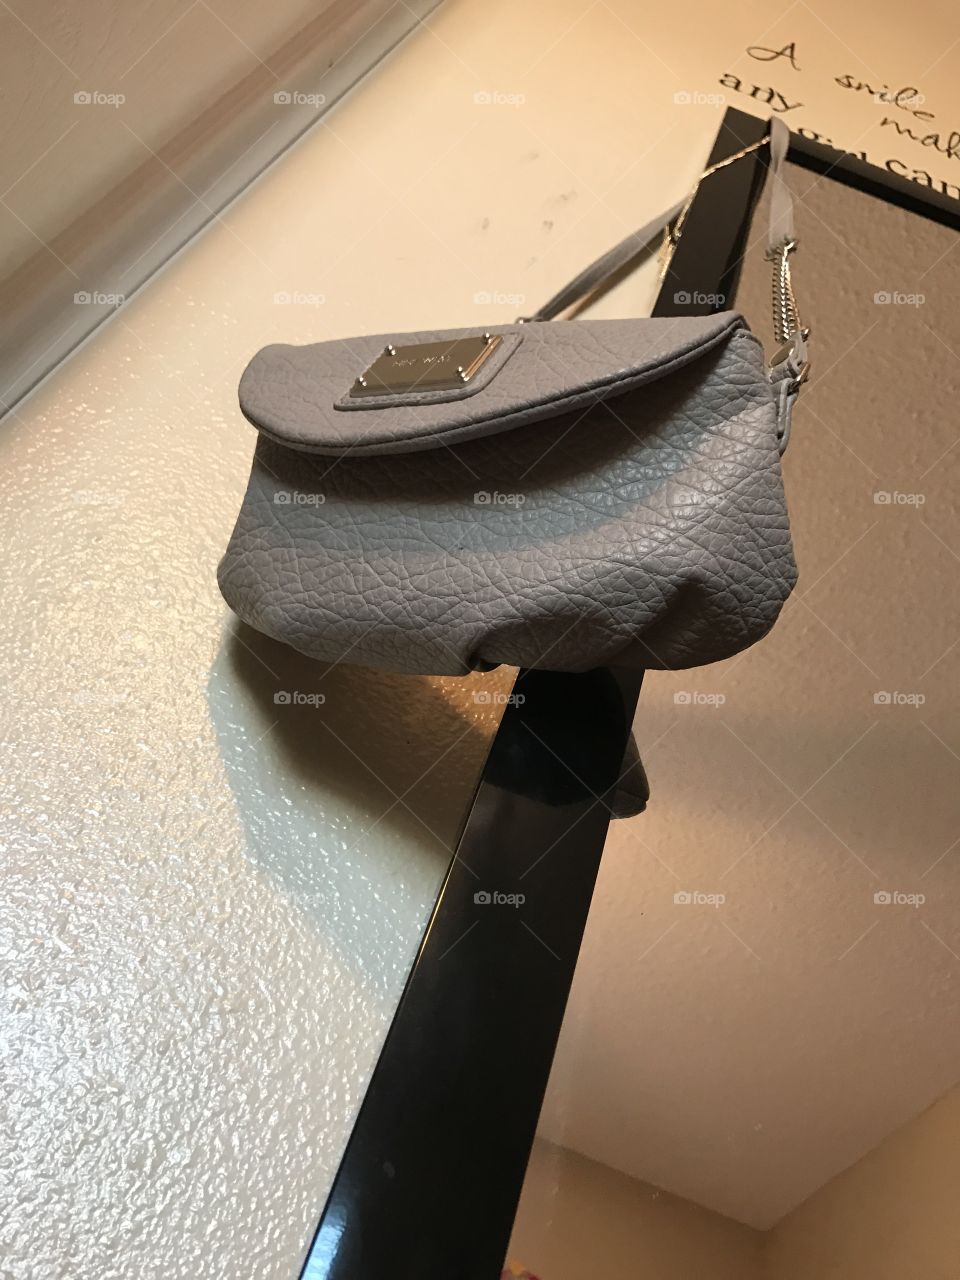 Hanging purse